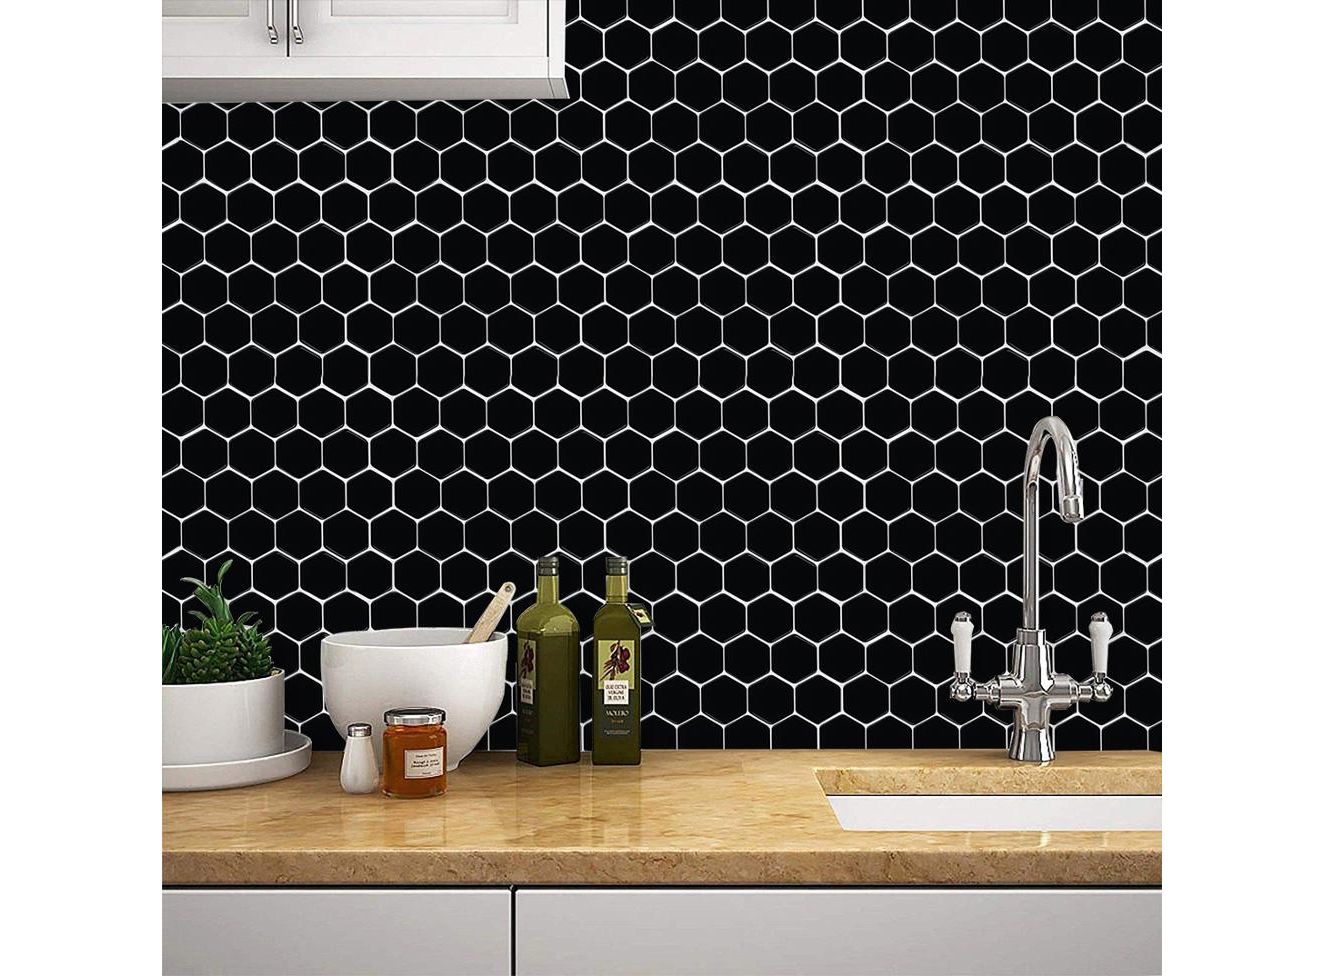 Generic 3D Wall Stickers Brick Wallpaper Tile for Kitchen Bathroom  Backsplash Anti-Tile Home Decor 28x23.5Cm @ Best Price Online | Jumia Egypt